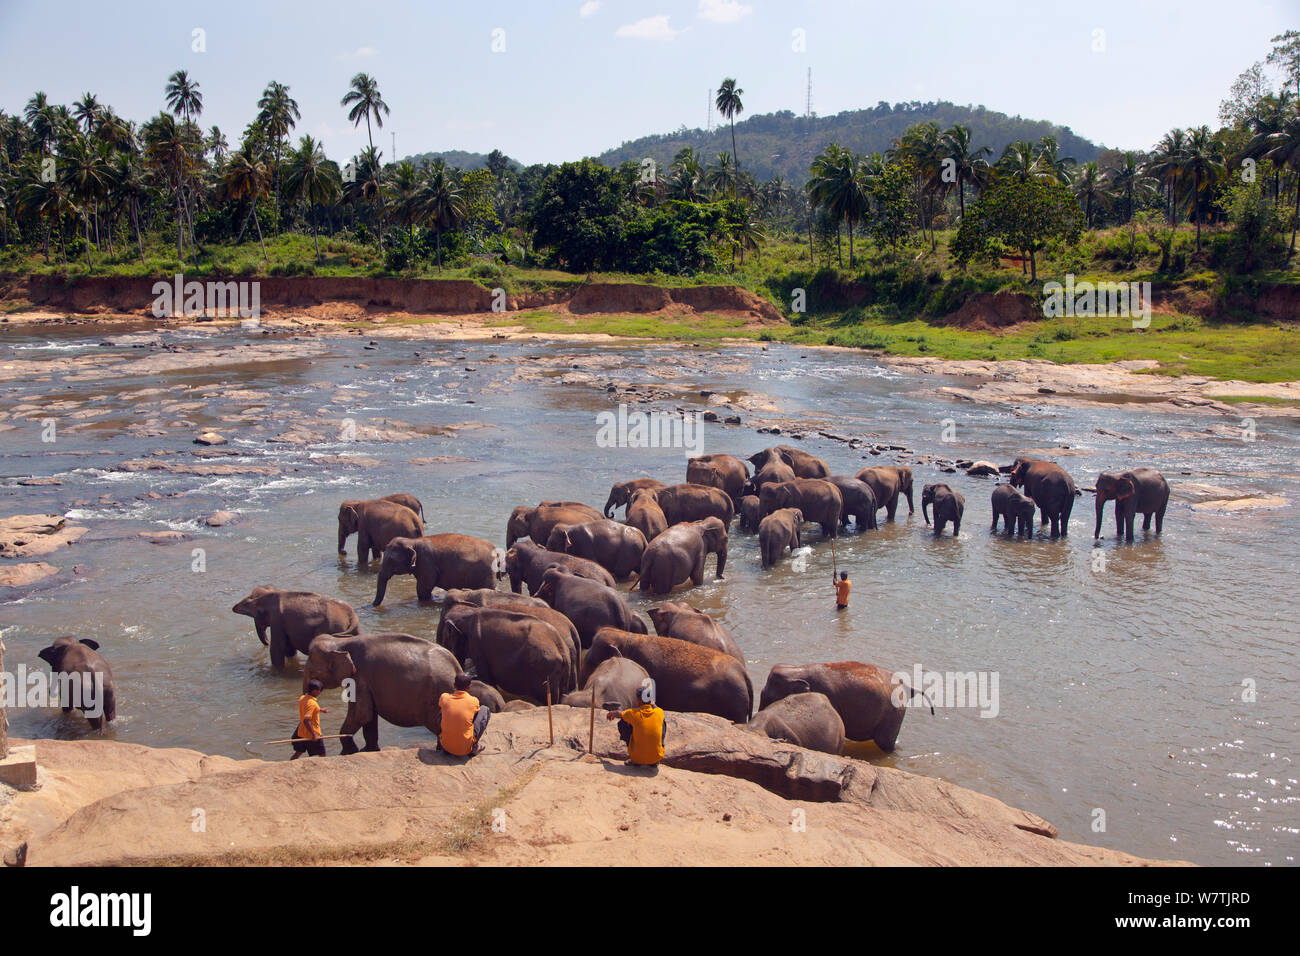 Sri lankan elephants (Elephas maximus maximus) from Pinnawala Elephant Orphanage bathing  in the Maha Oya river with their carers nearby, part of a scheme run by the Sri Lankan Department of Wildlife, Sri Lanka. Stock Photo